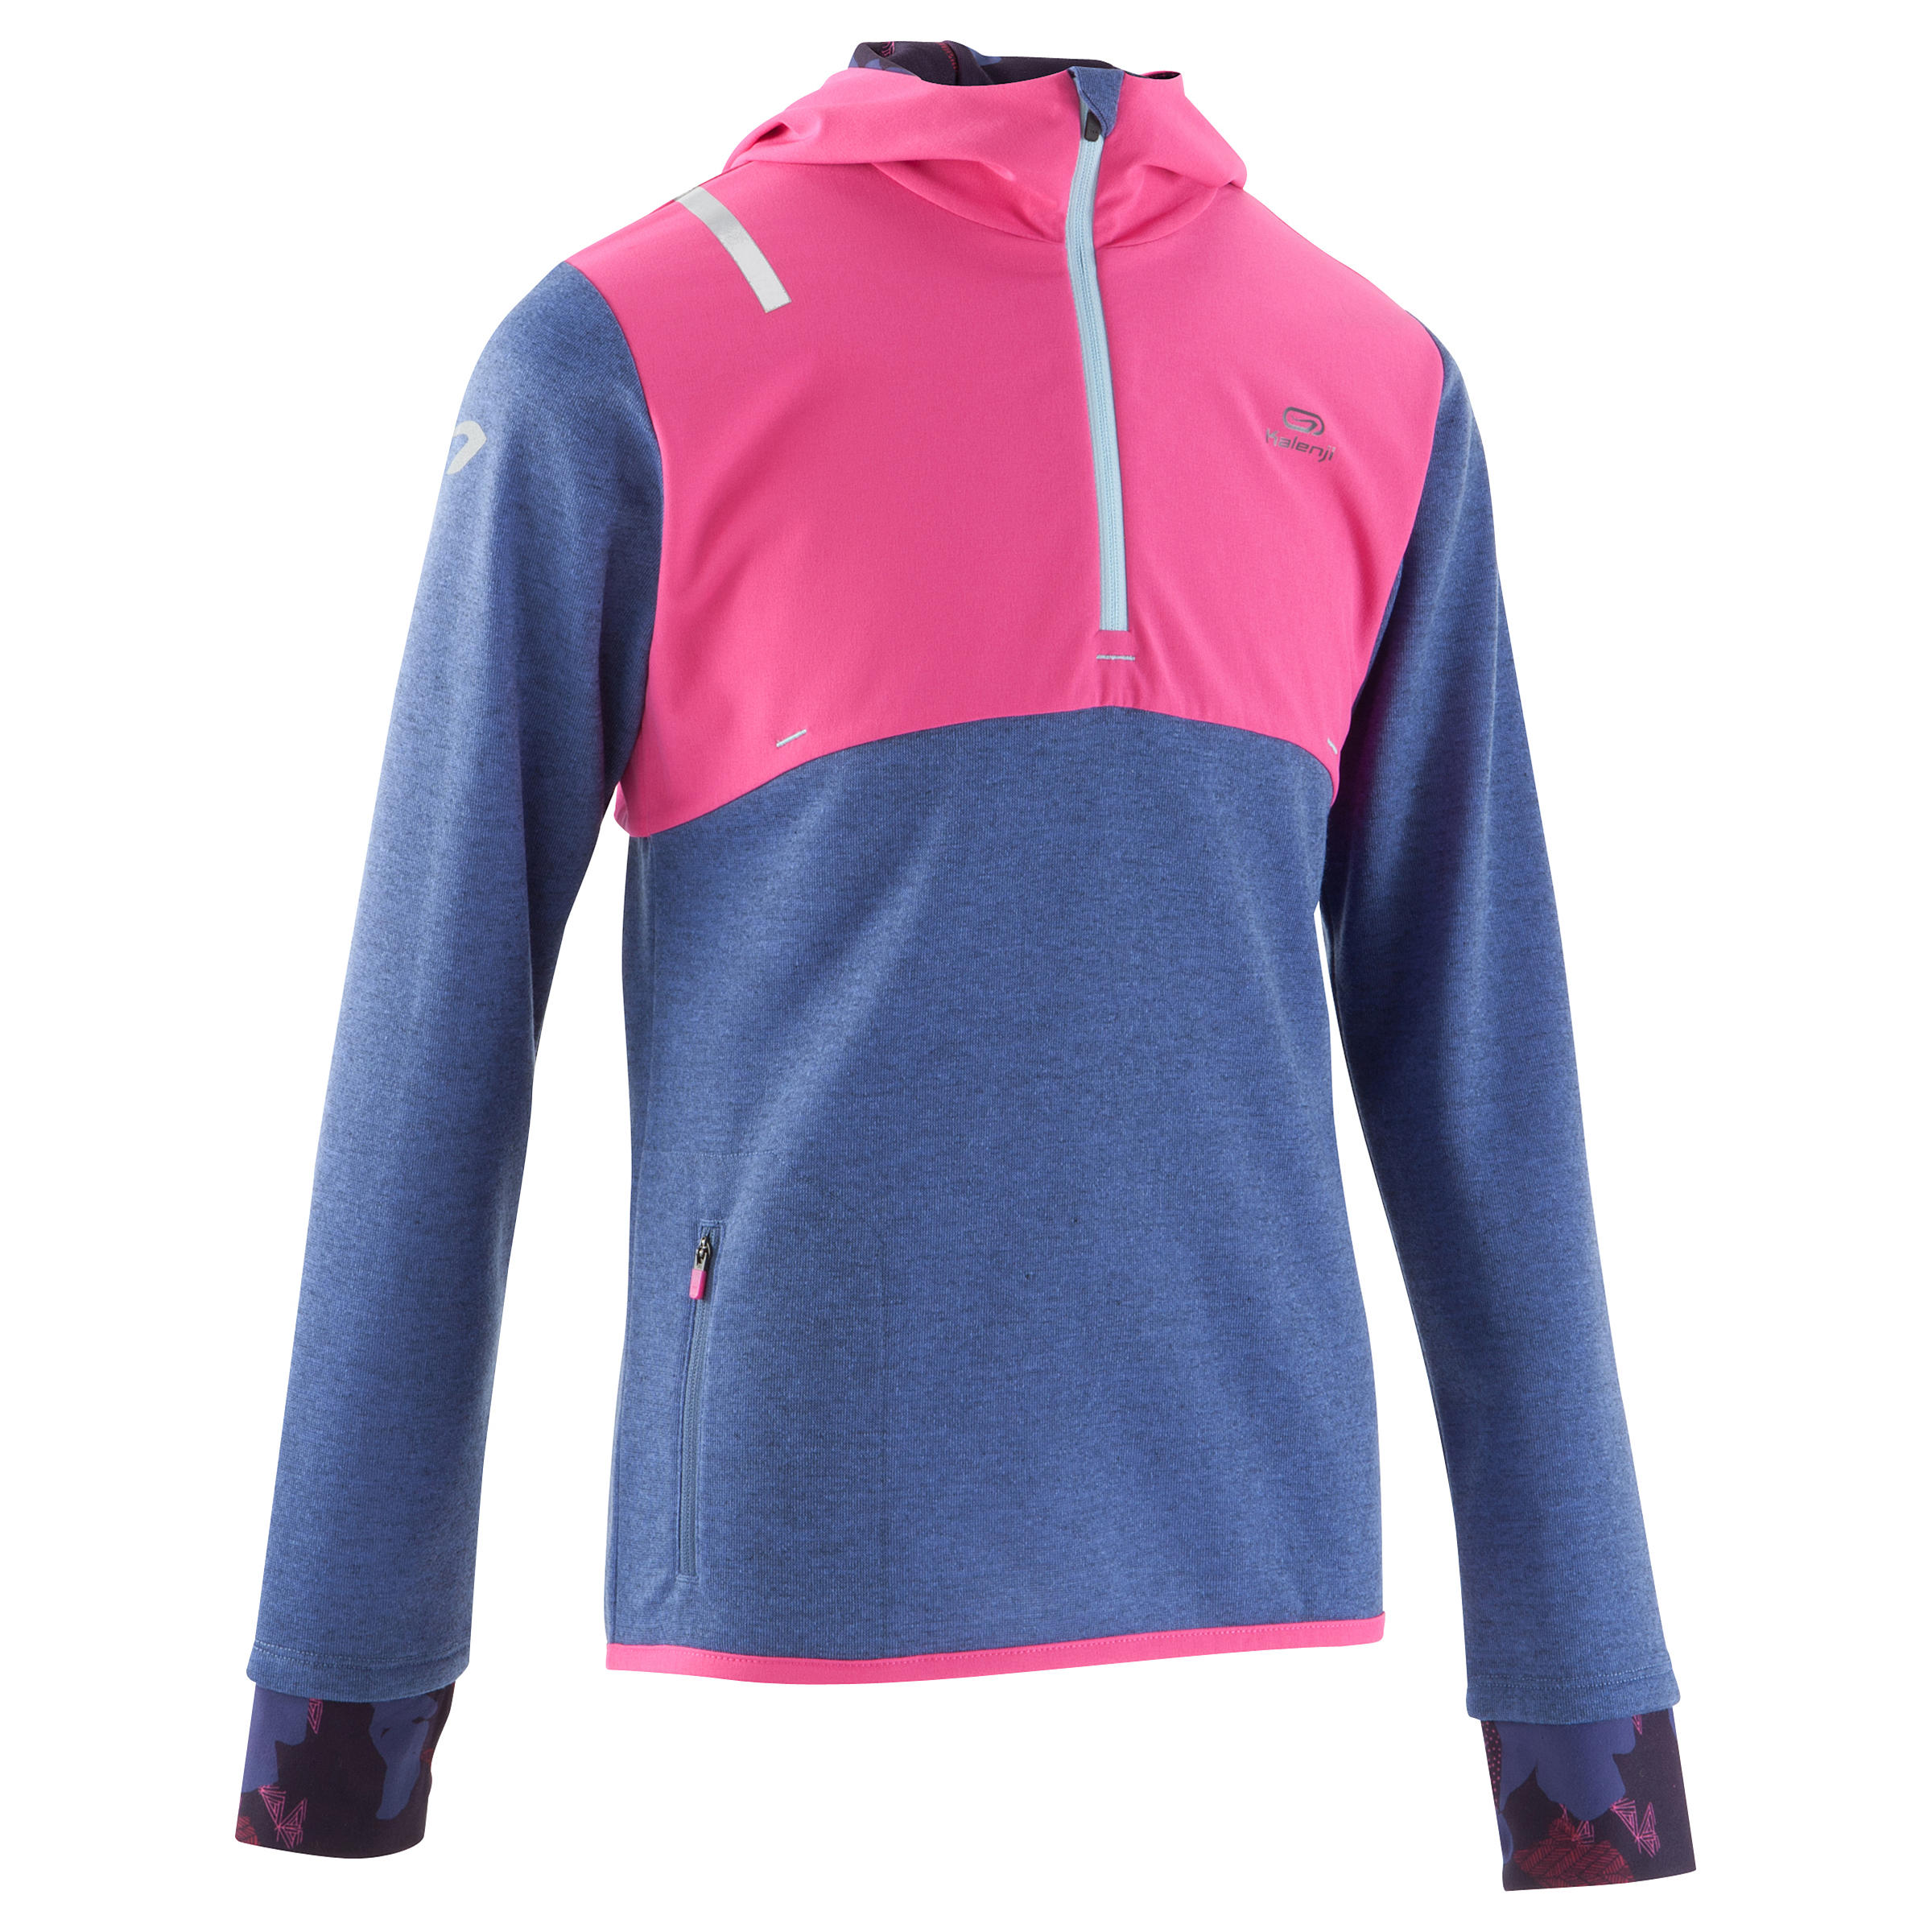 KALENJI Elio Children's Running Hooded Jersey - Pink/Blue
